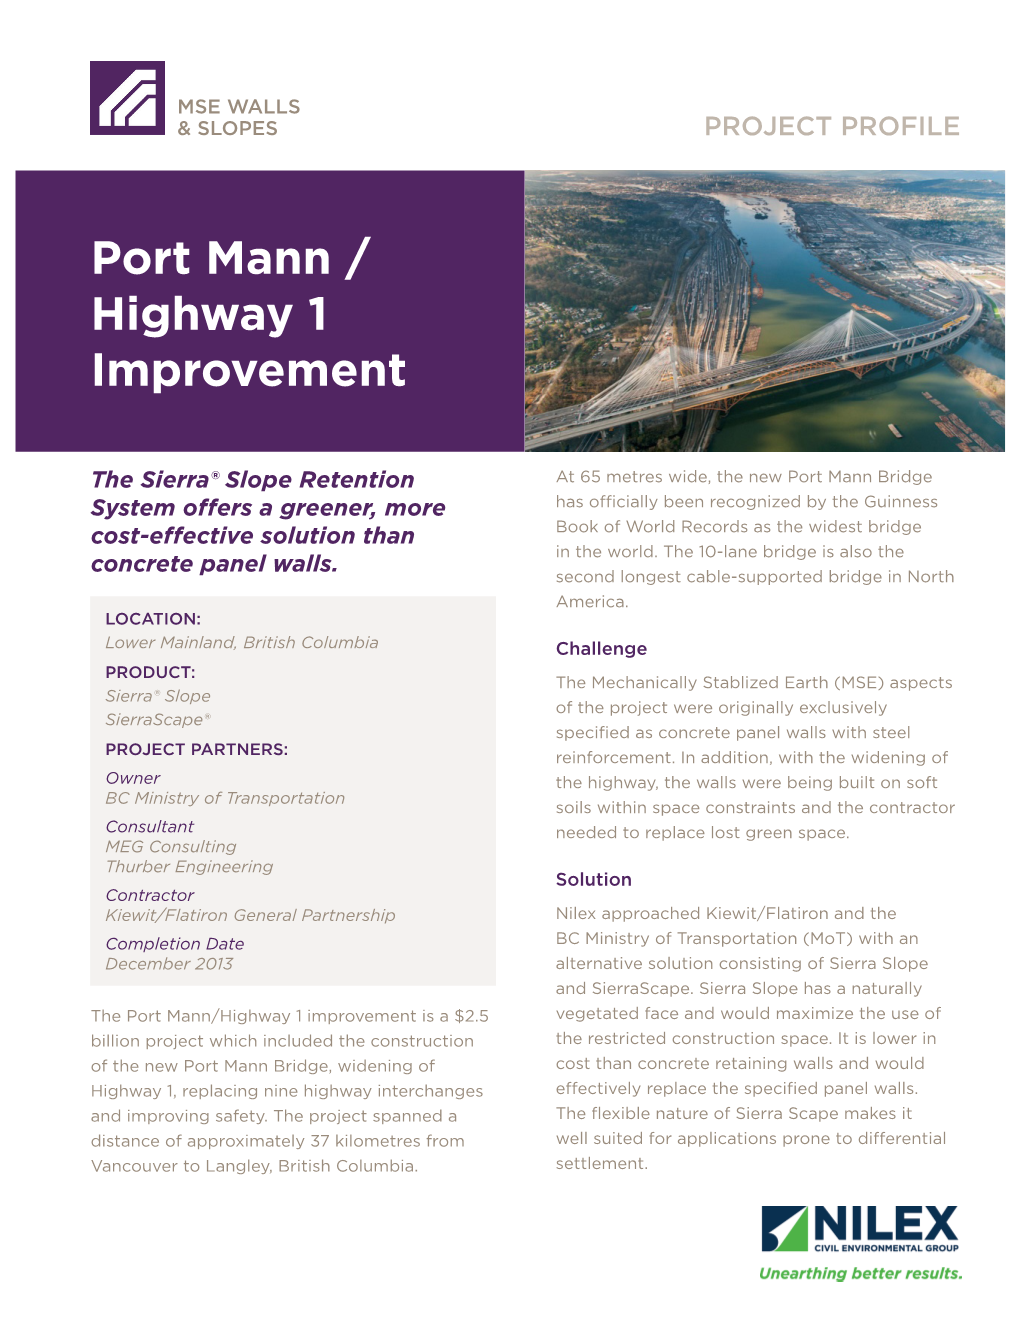 Port Mann Highway 1 Improvement Project Profile